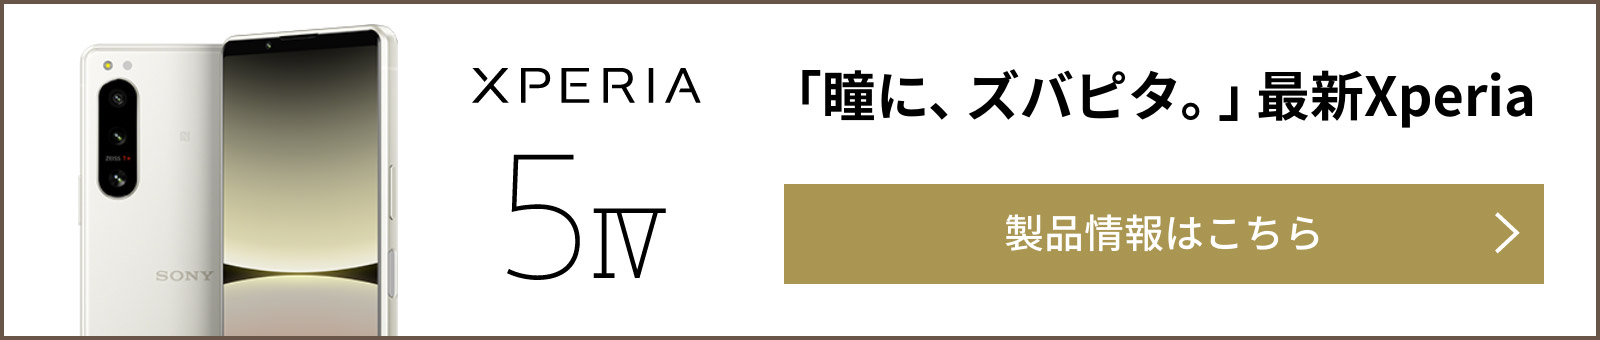 Xperia 5 IV「瞳に、ズパピタ。」最新Xperia 製品情報はこちら